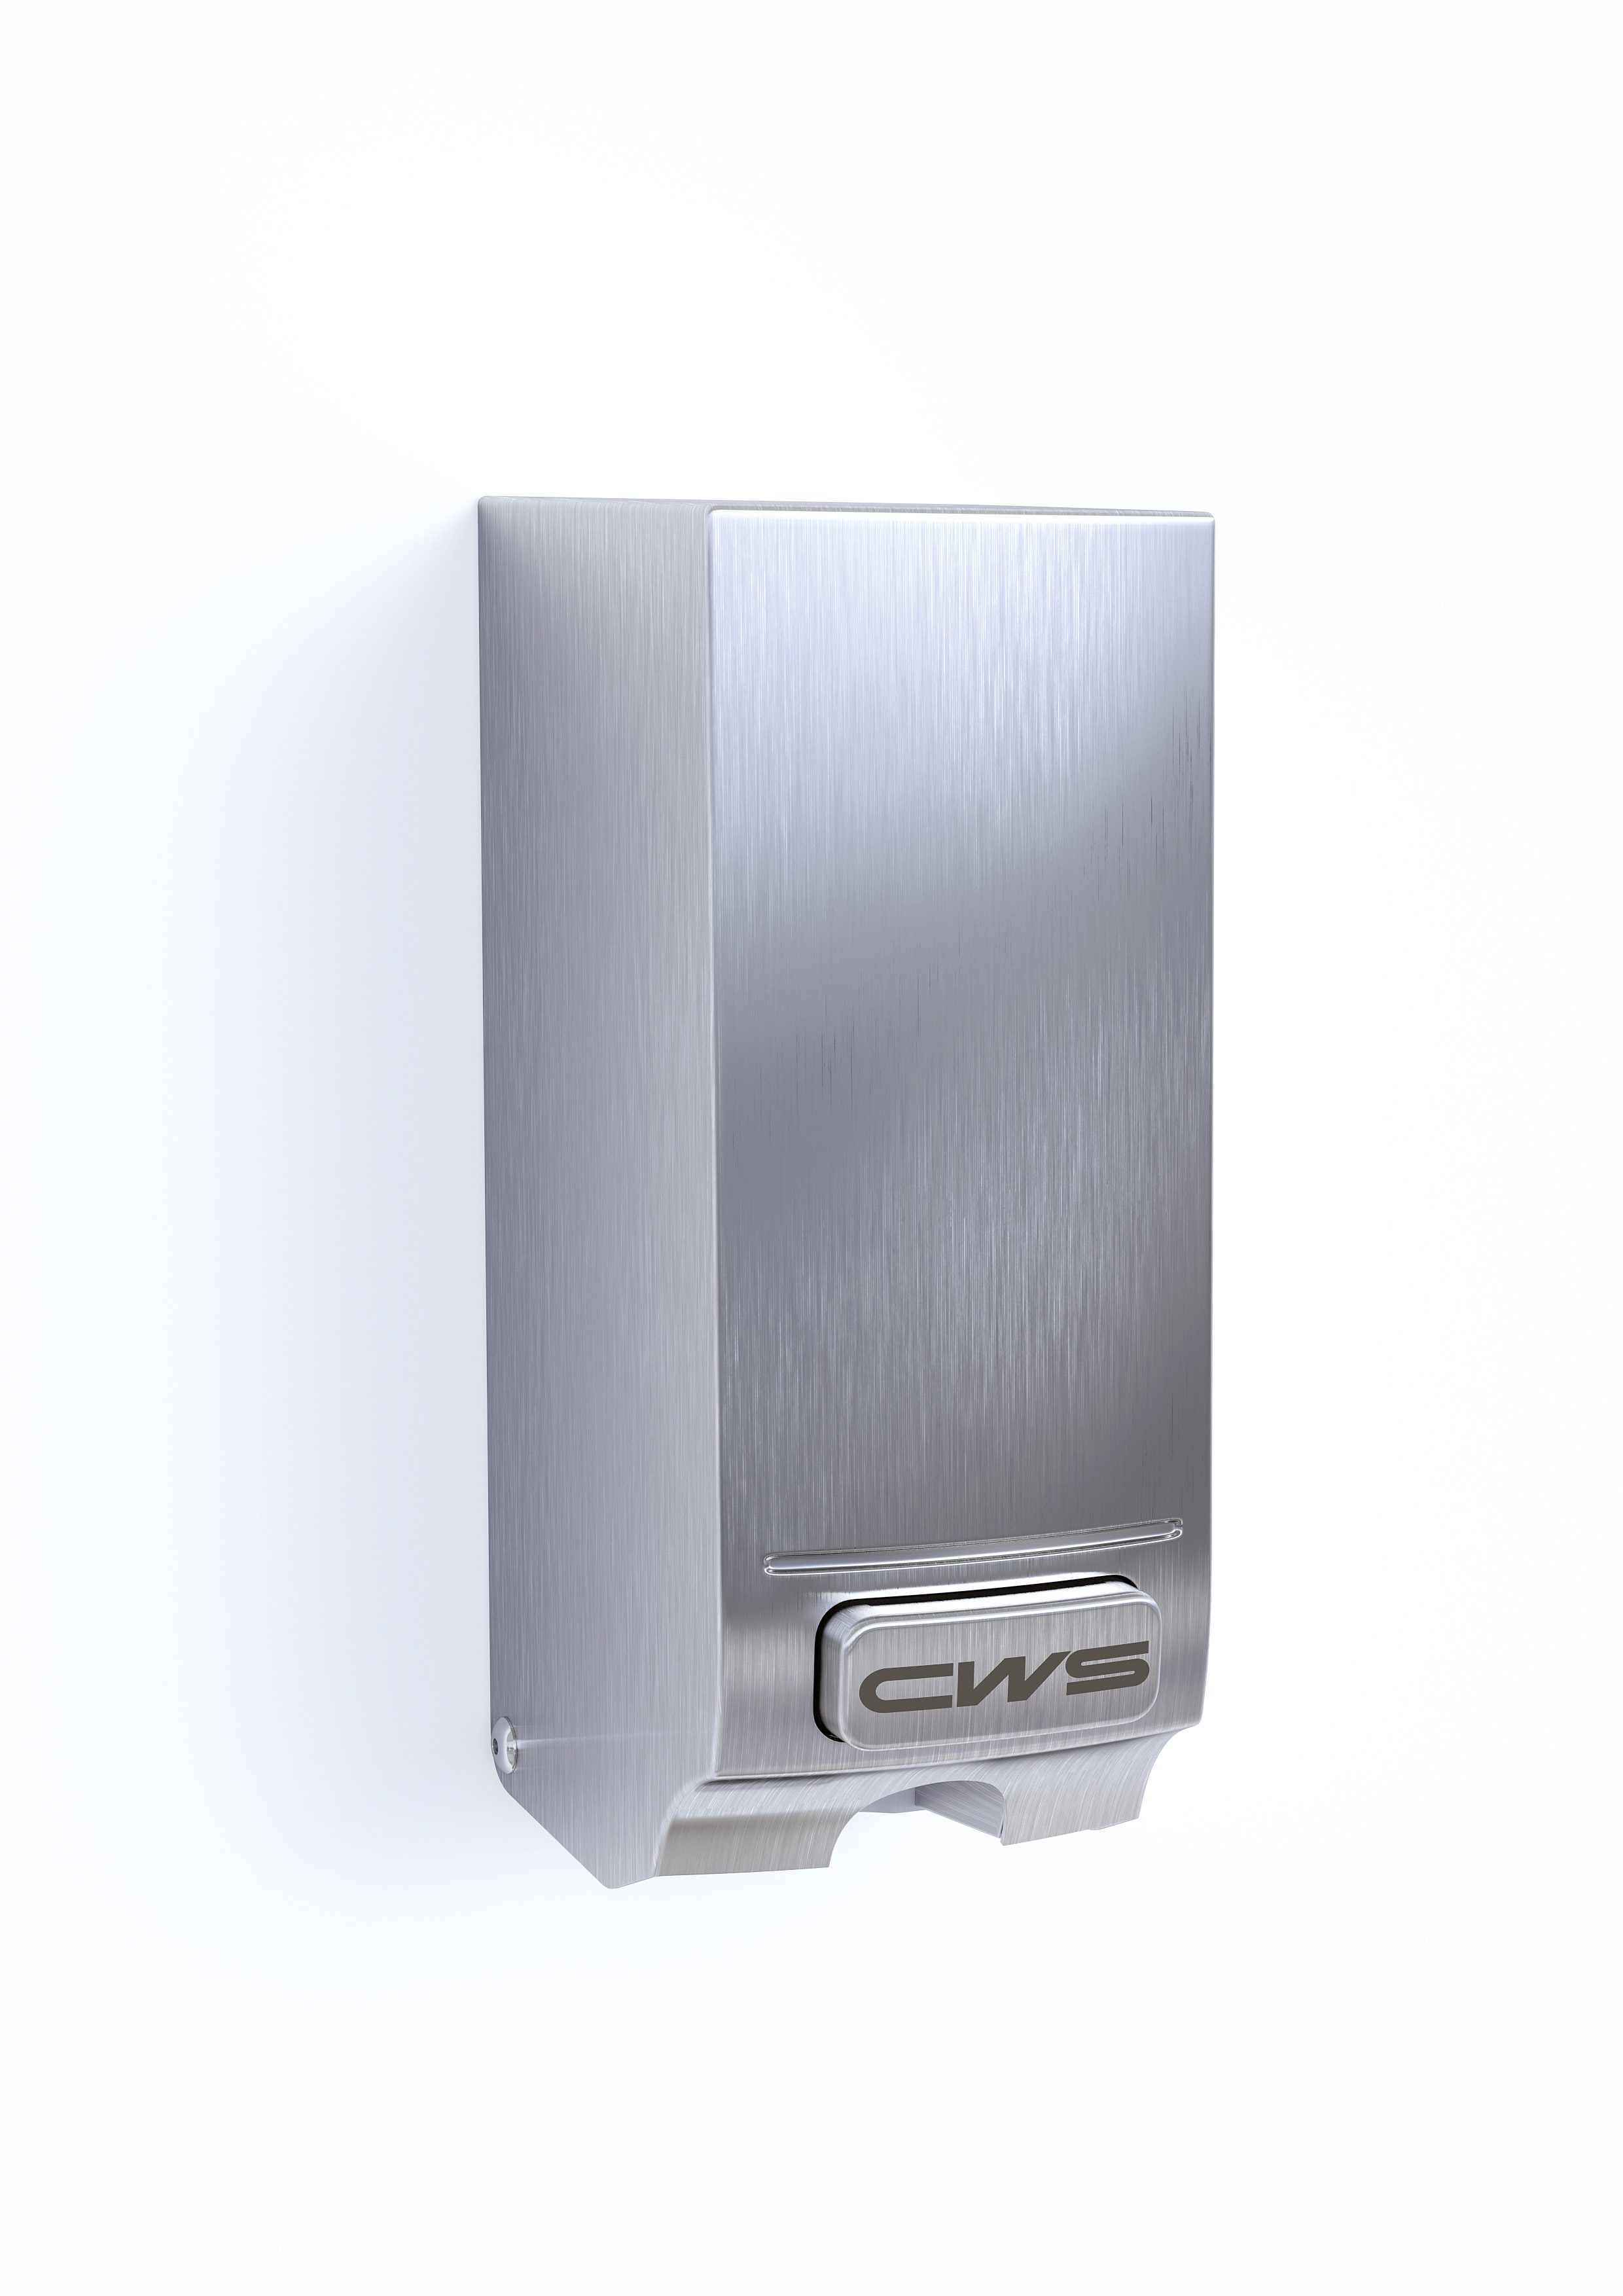 CWS Toilettensitzreiniger-Spender ParadiseLine Stainless Steel